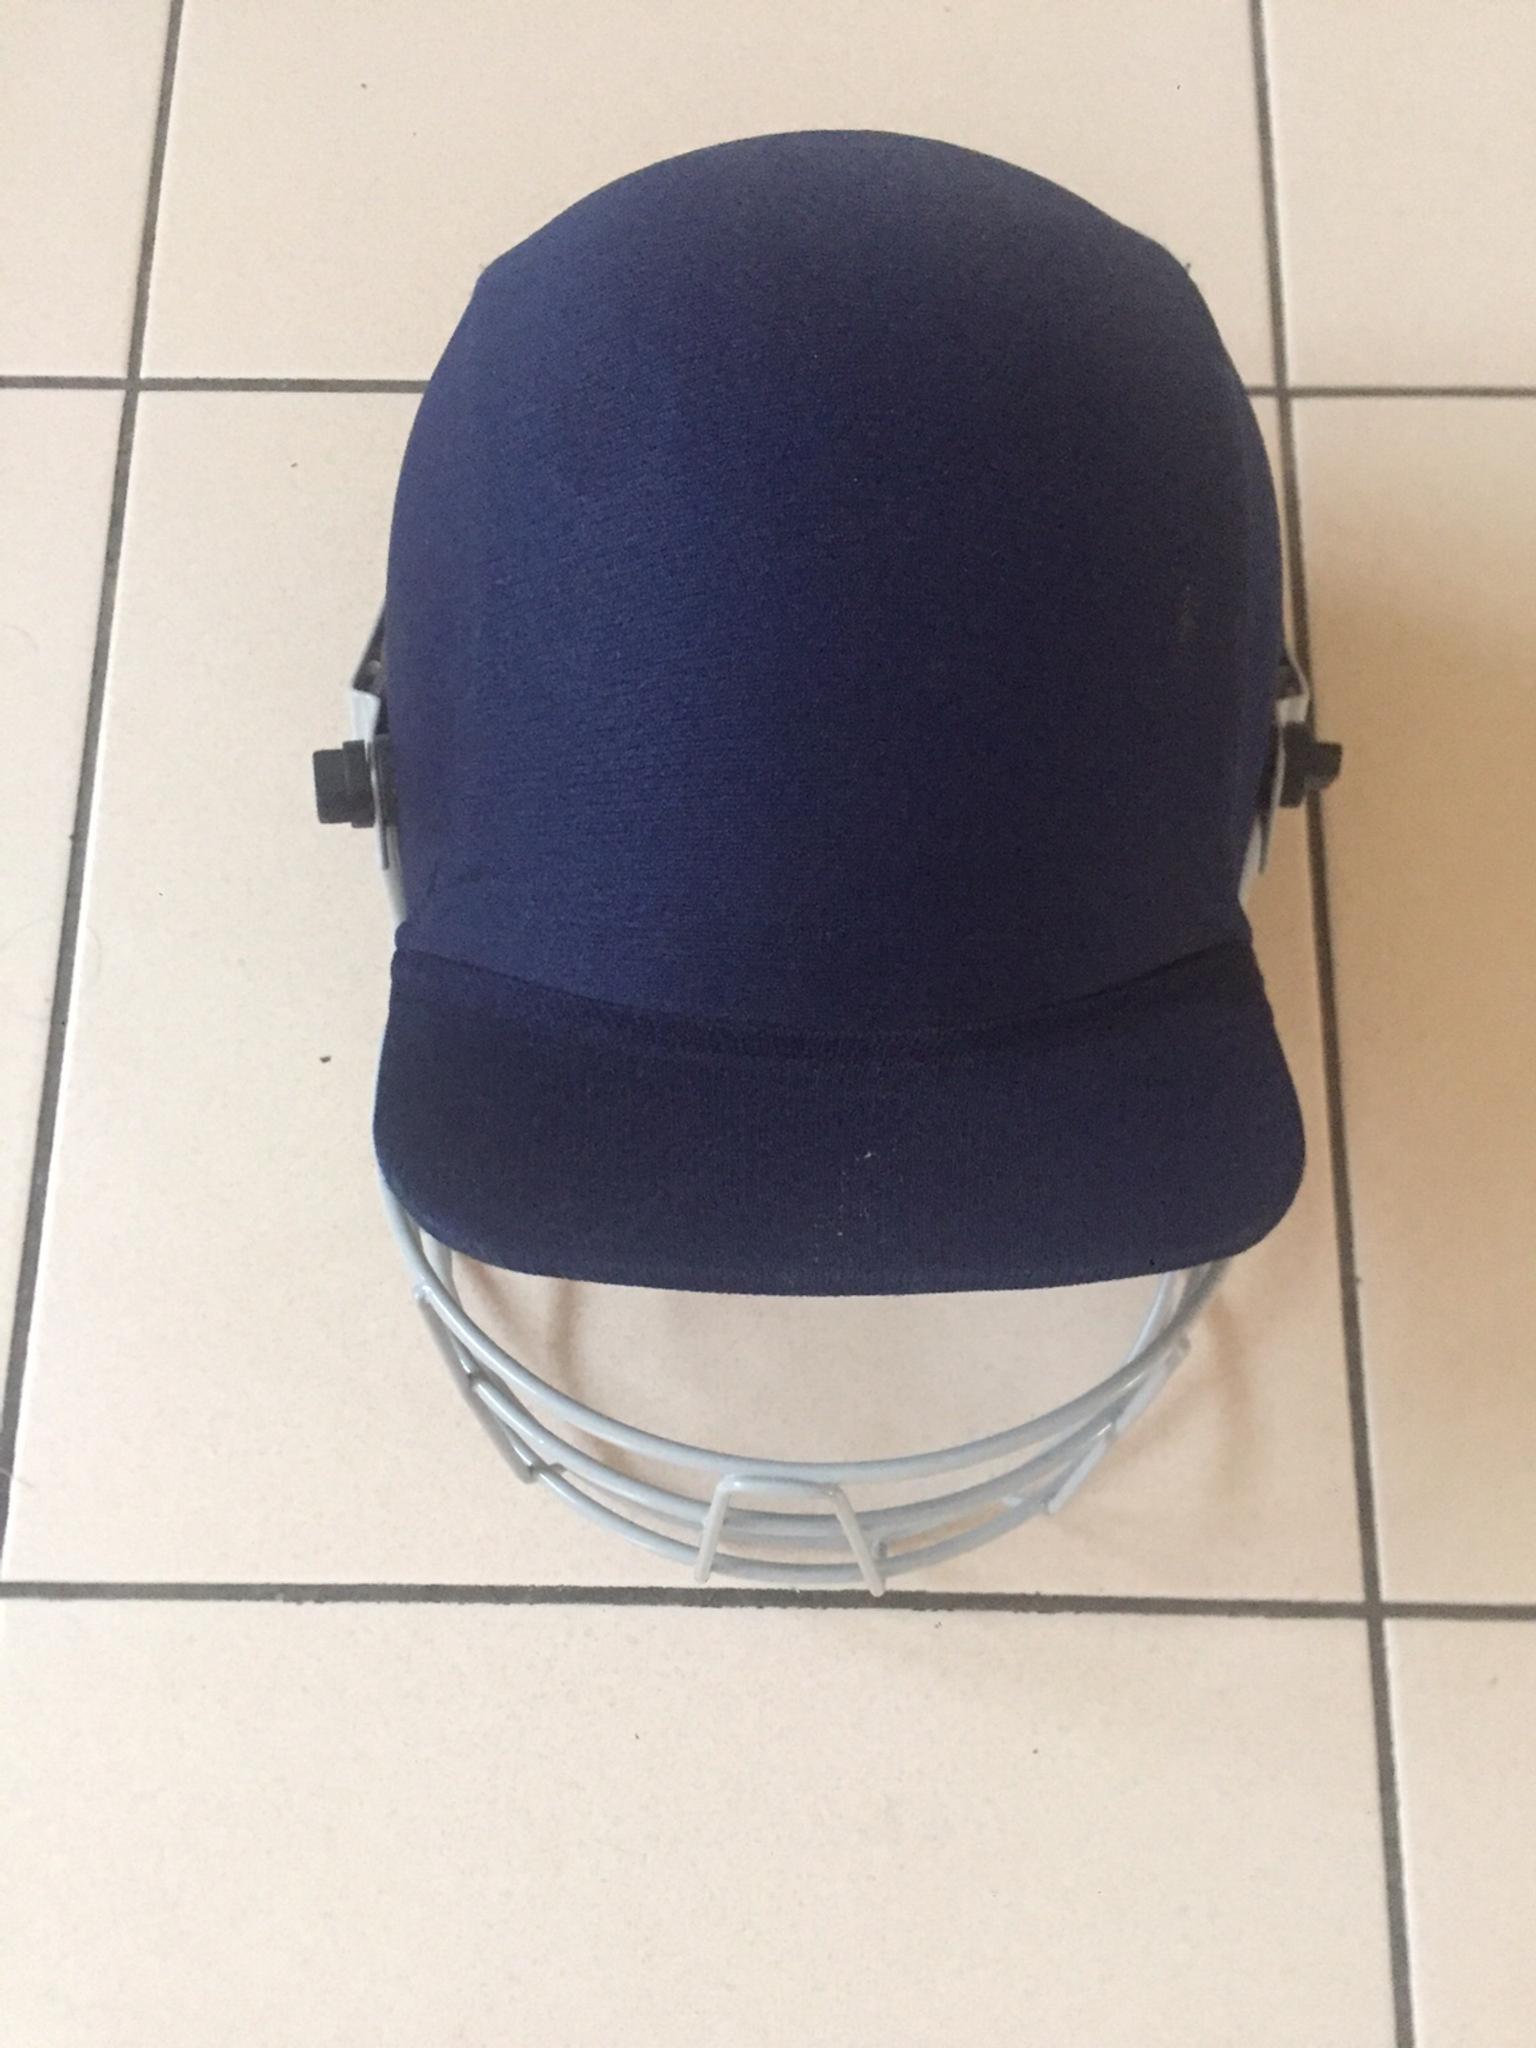 Helmet For Cricket In Charnwood Fur 12 00 Zum Verkauf Shpock De